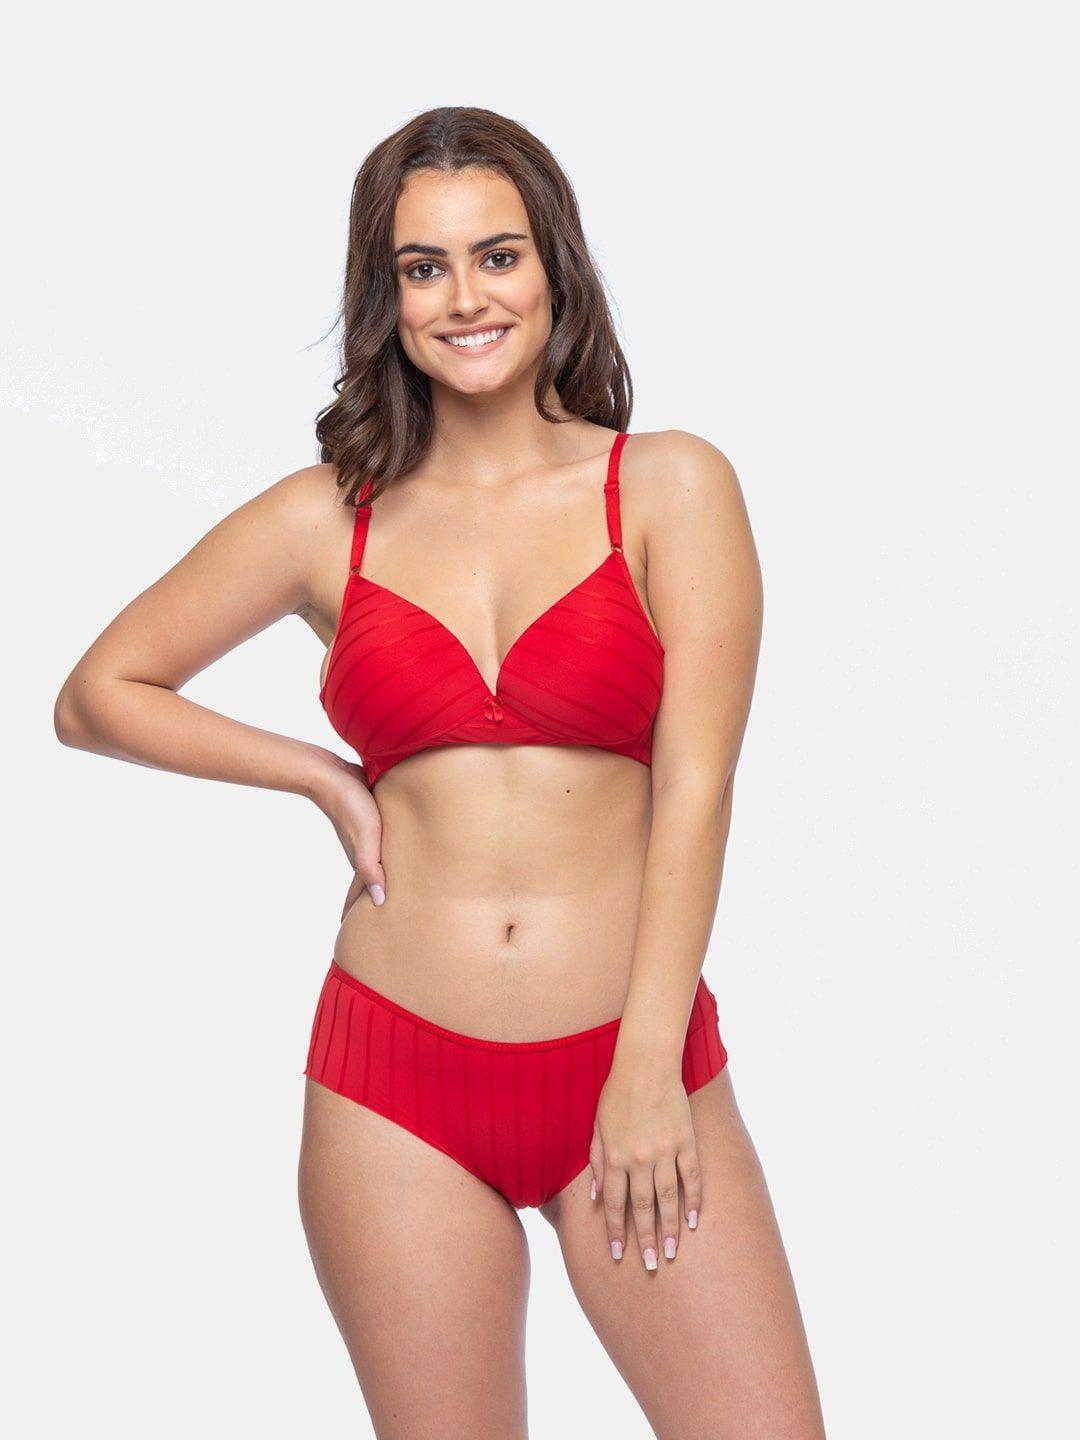 curwish women red striped bikini lingerie set sbb-01r